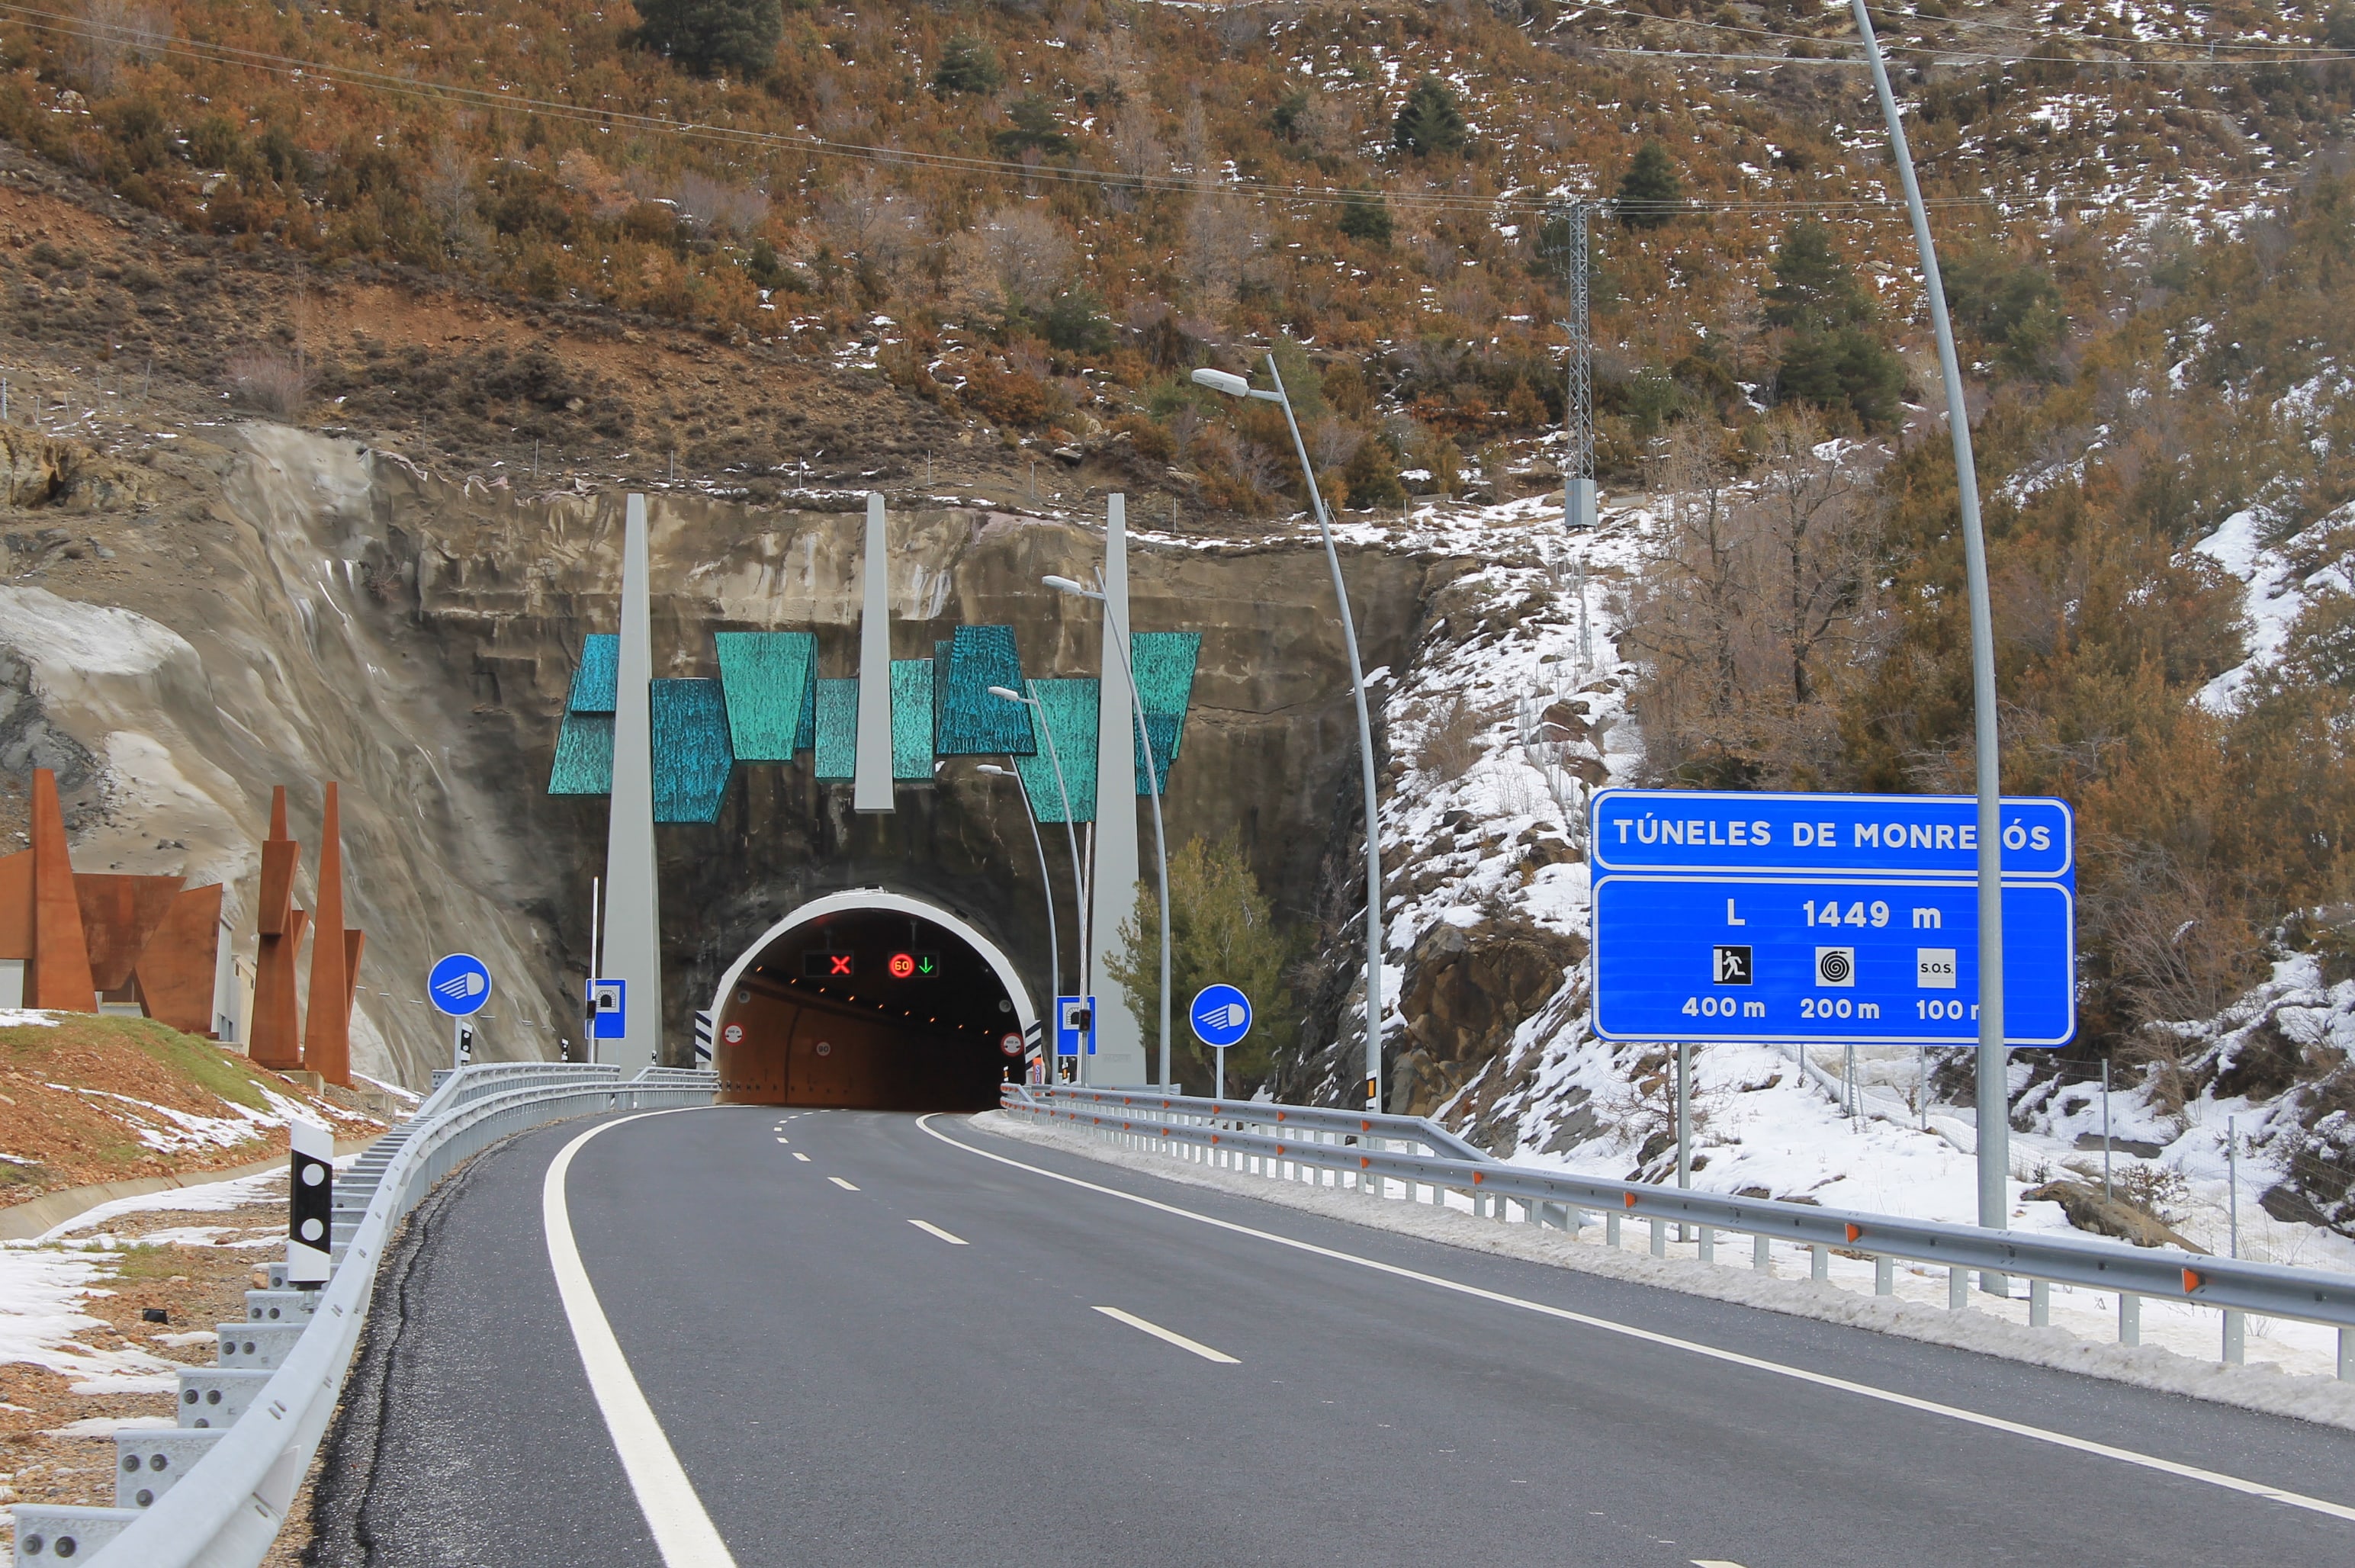 Entrance to the Montrepós Tunnel